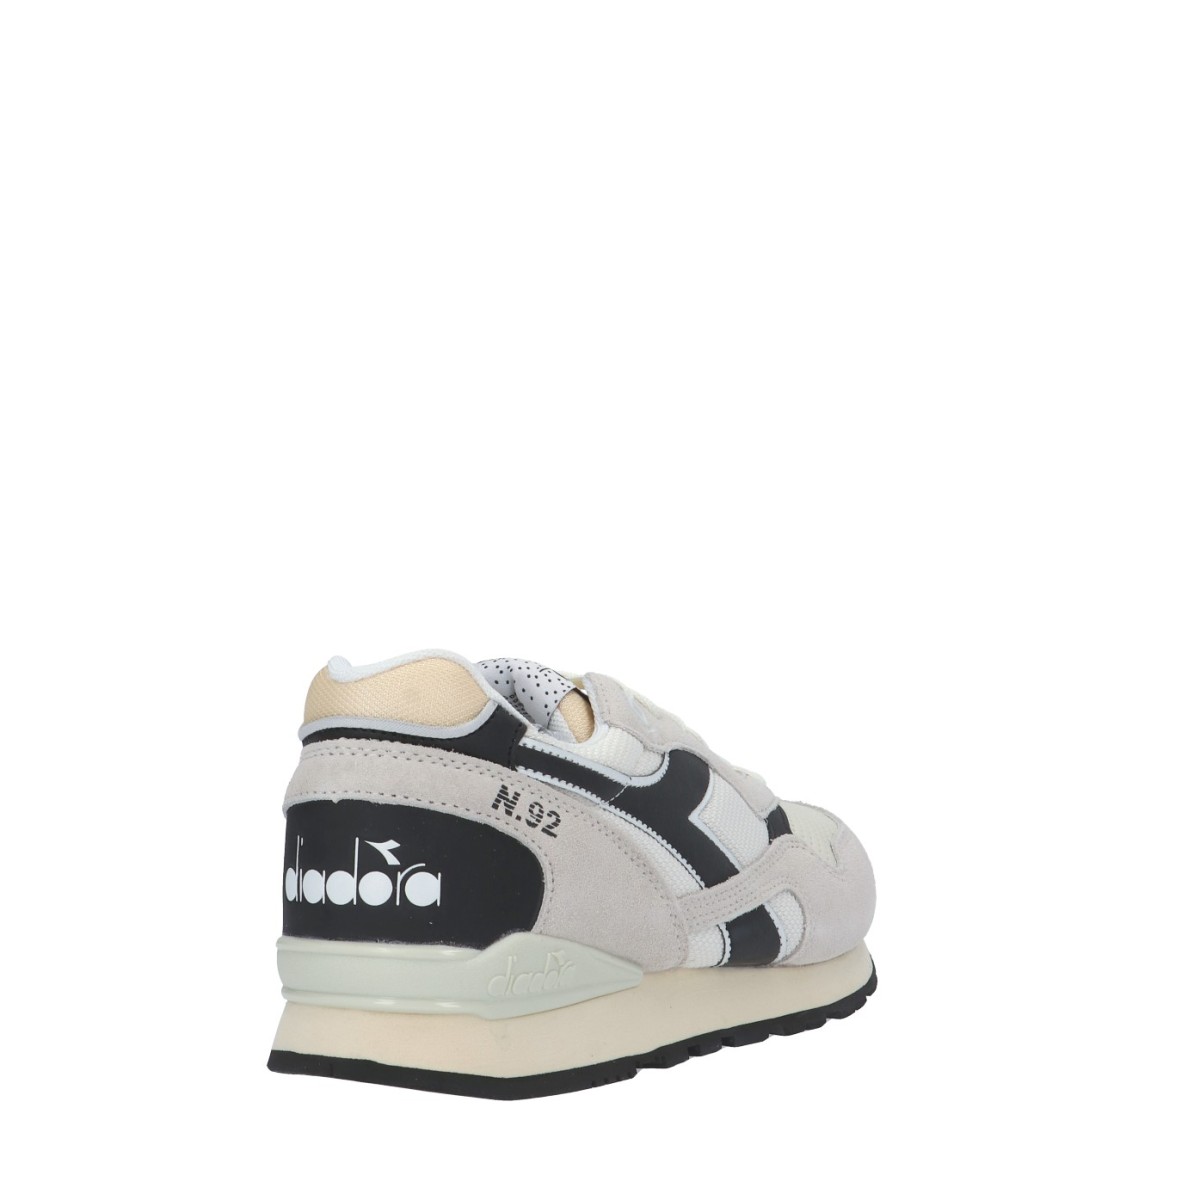 Diadora Sneaker Vanilla Gomma 101.178042